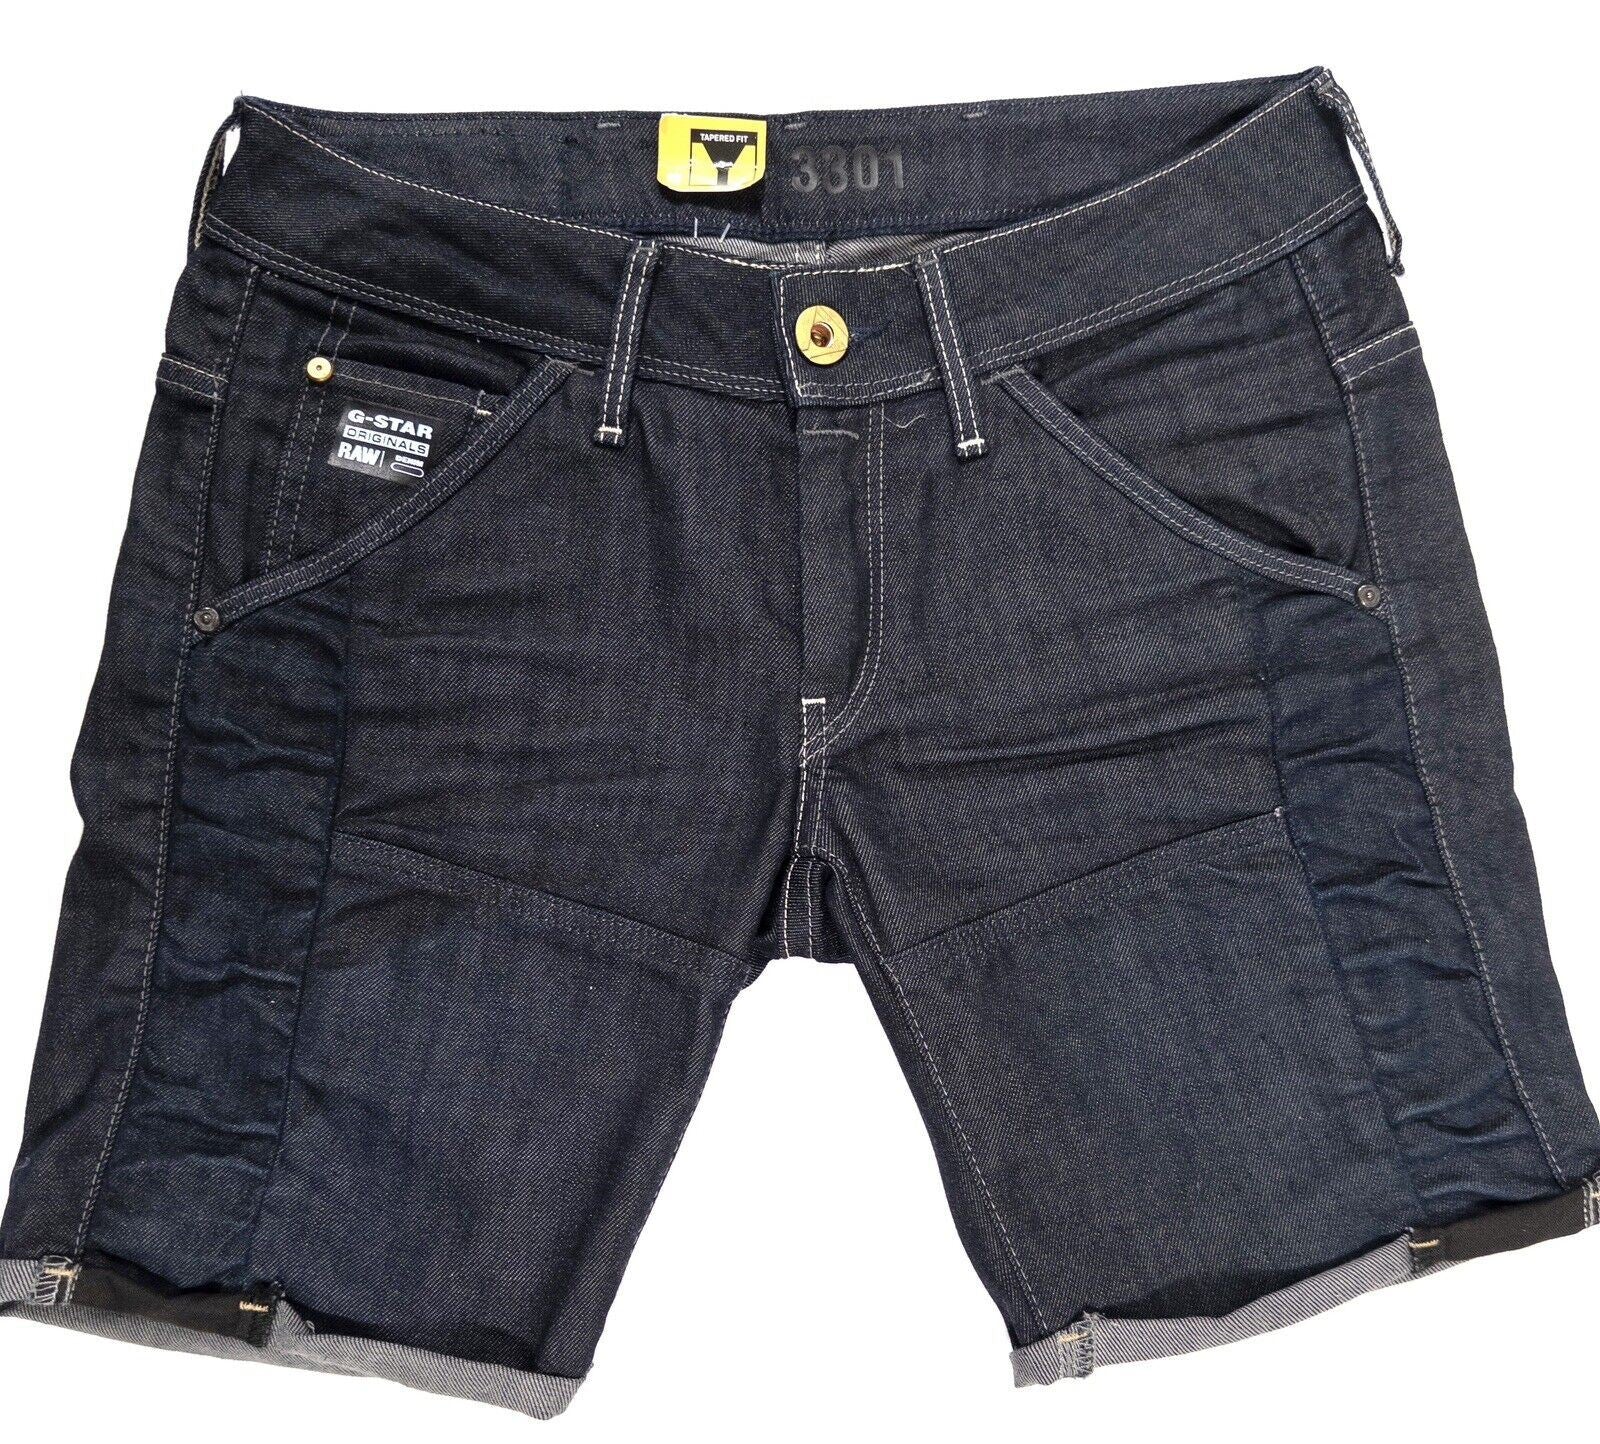 G-STAR RAW Originals Dark Blue Men's Denim Shorts Size UK W28 L34